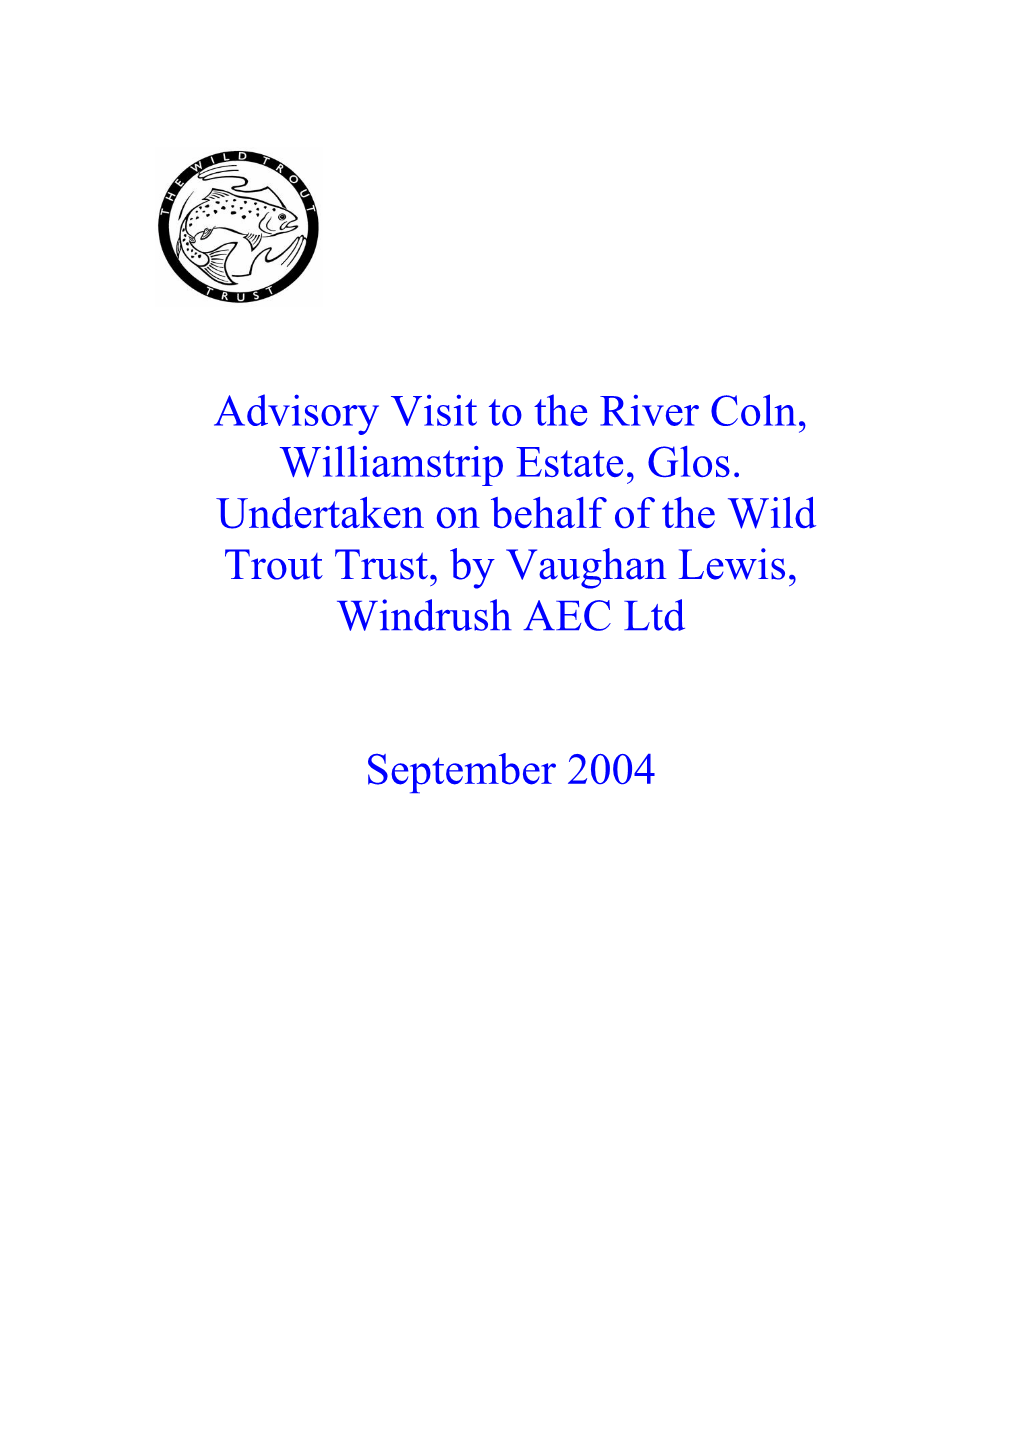 Advisory Visit to the River Coln, Williamstrip Estate, Glos